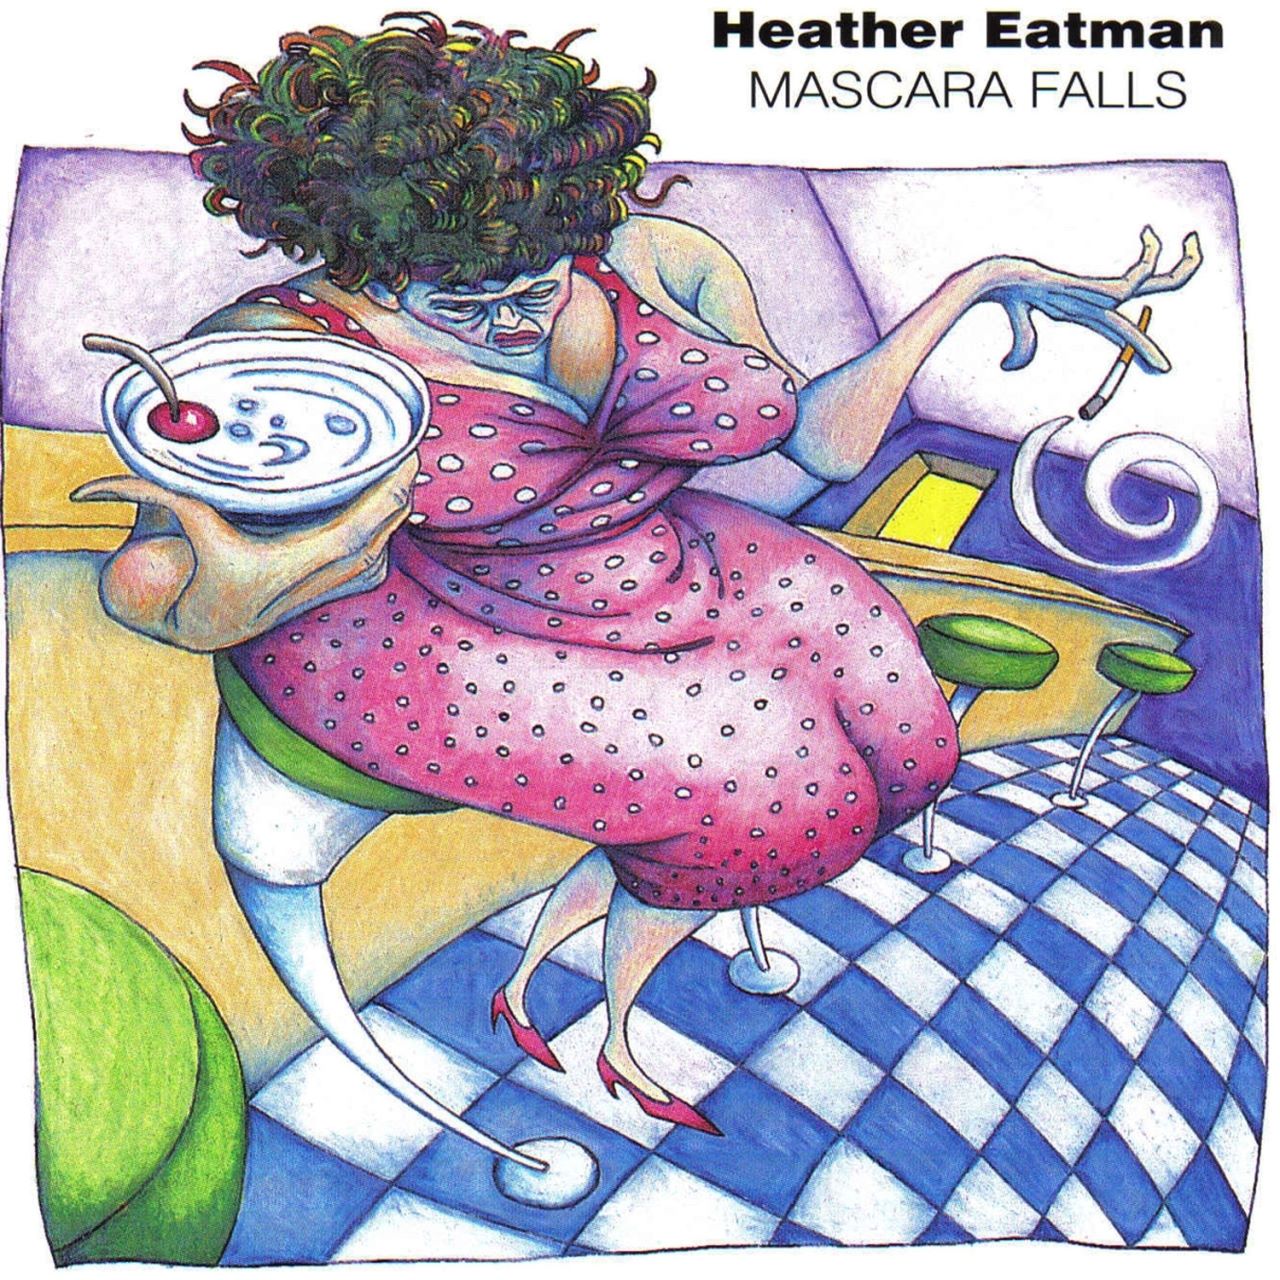 Heather Eatman - Mascara Falls cover album